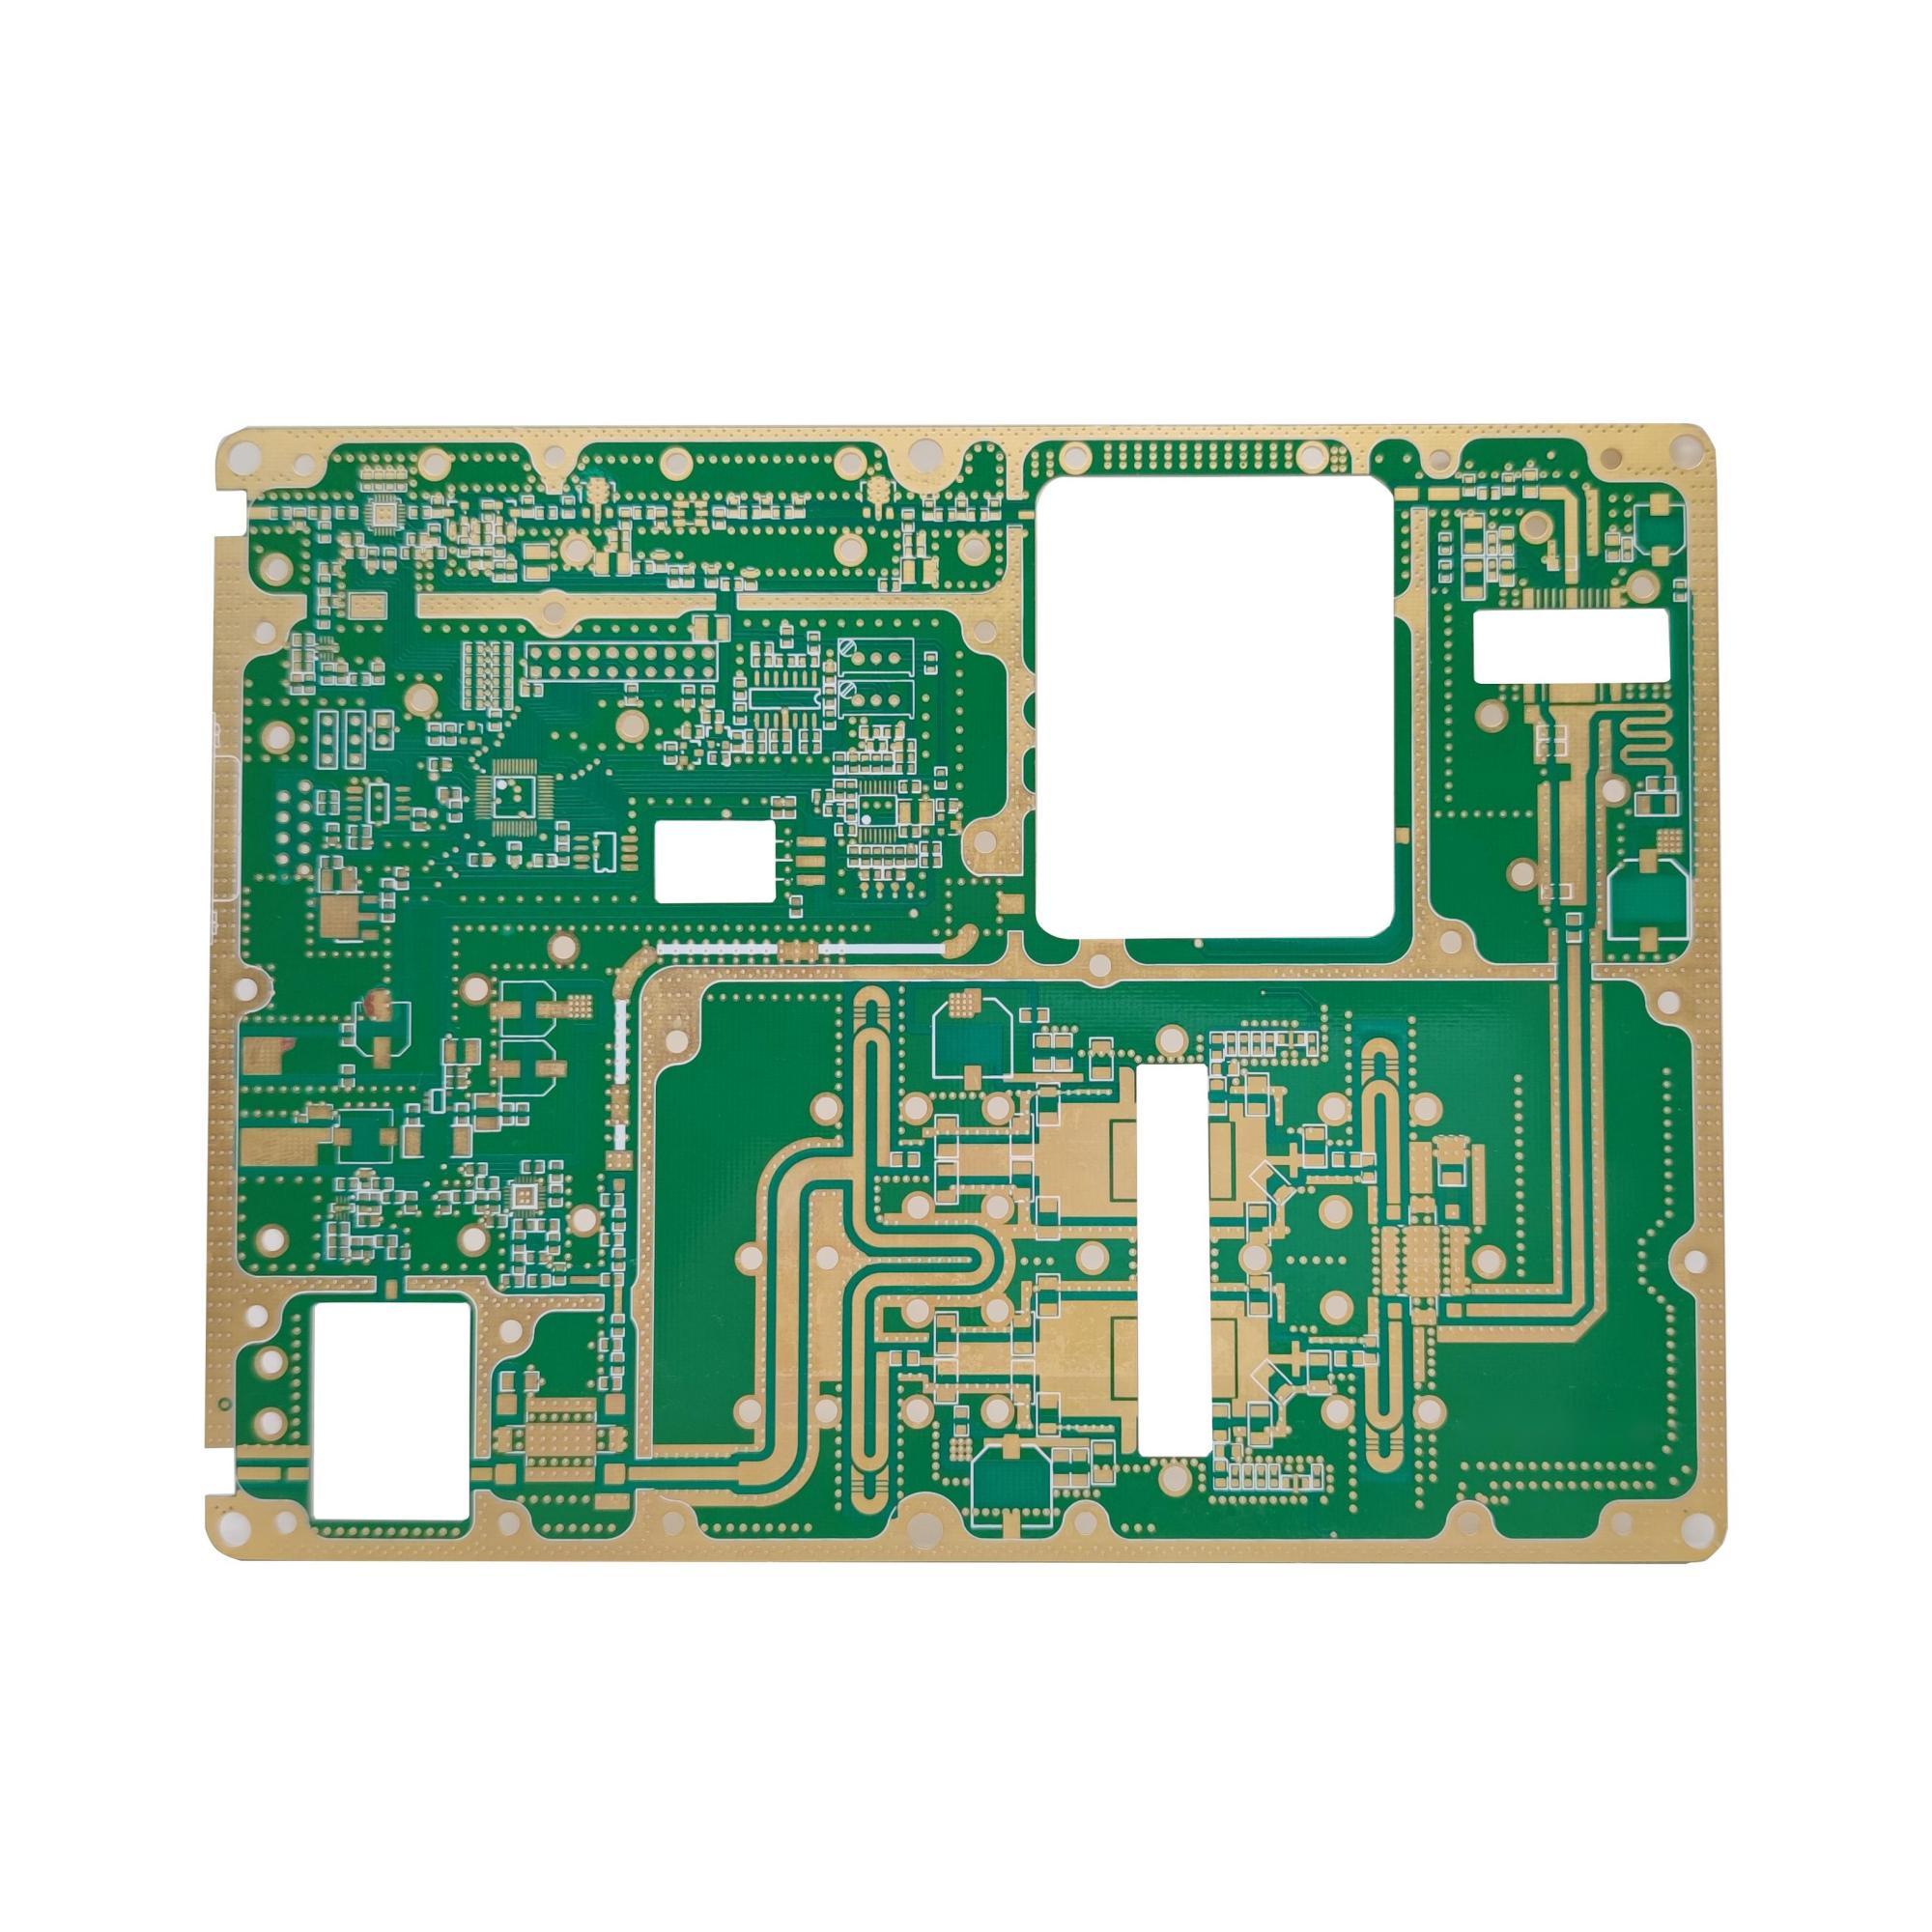 Rogers RO4350B frékuénsi luhur circuit board pcb kalawan 2OZ tambaga Diulas Gambar